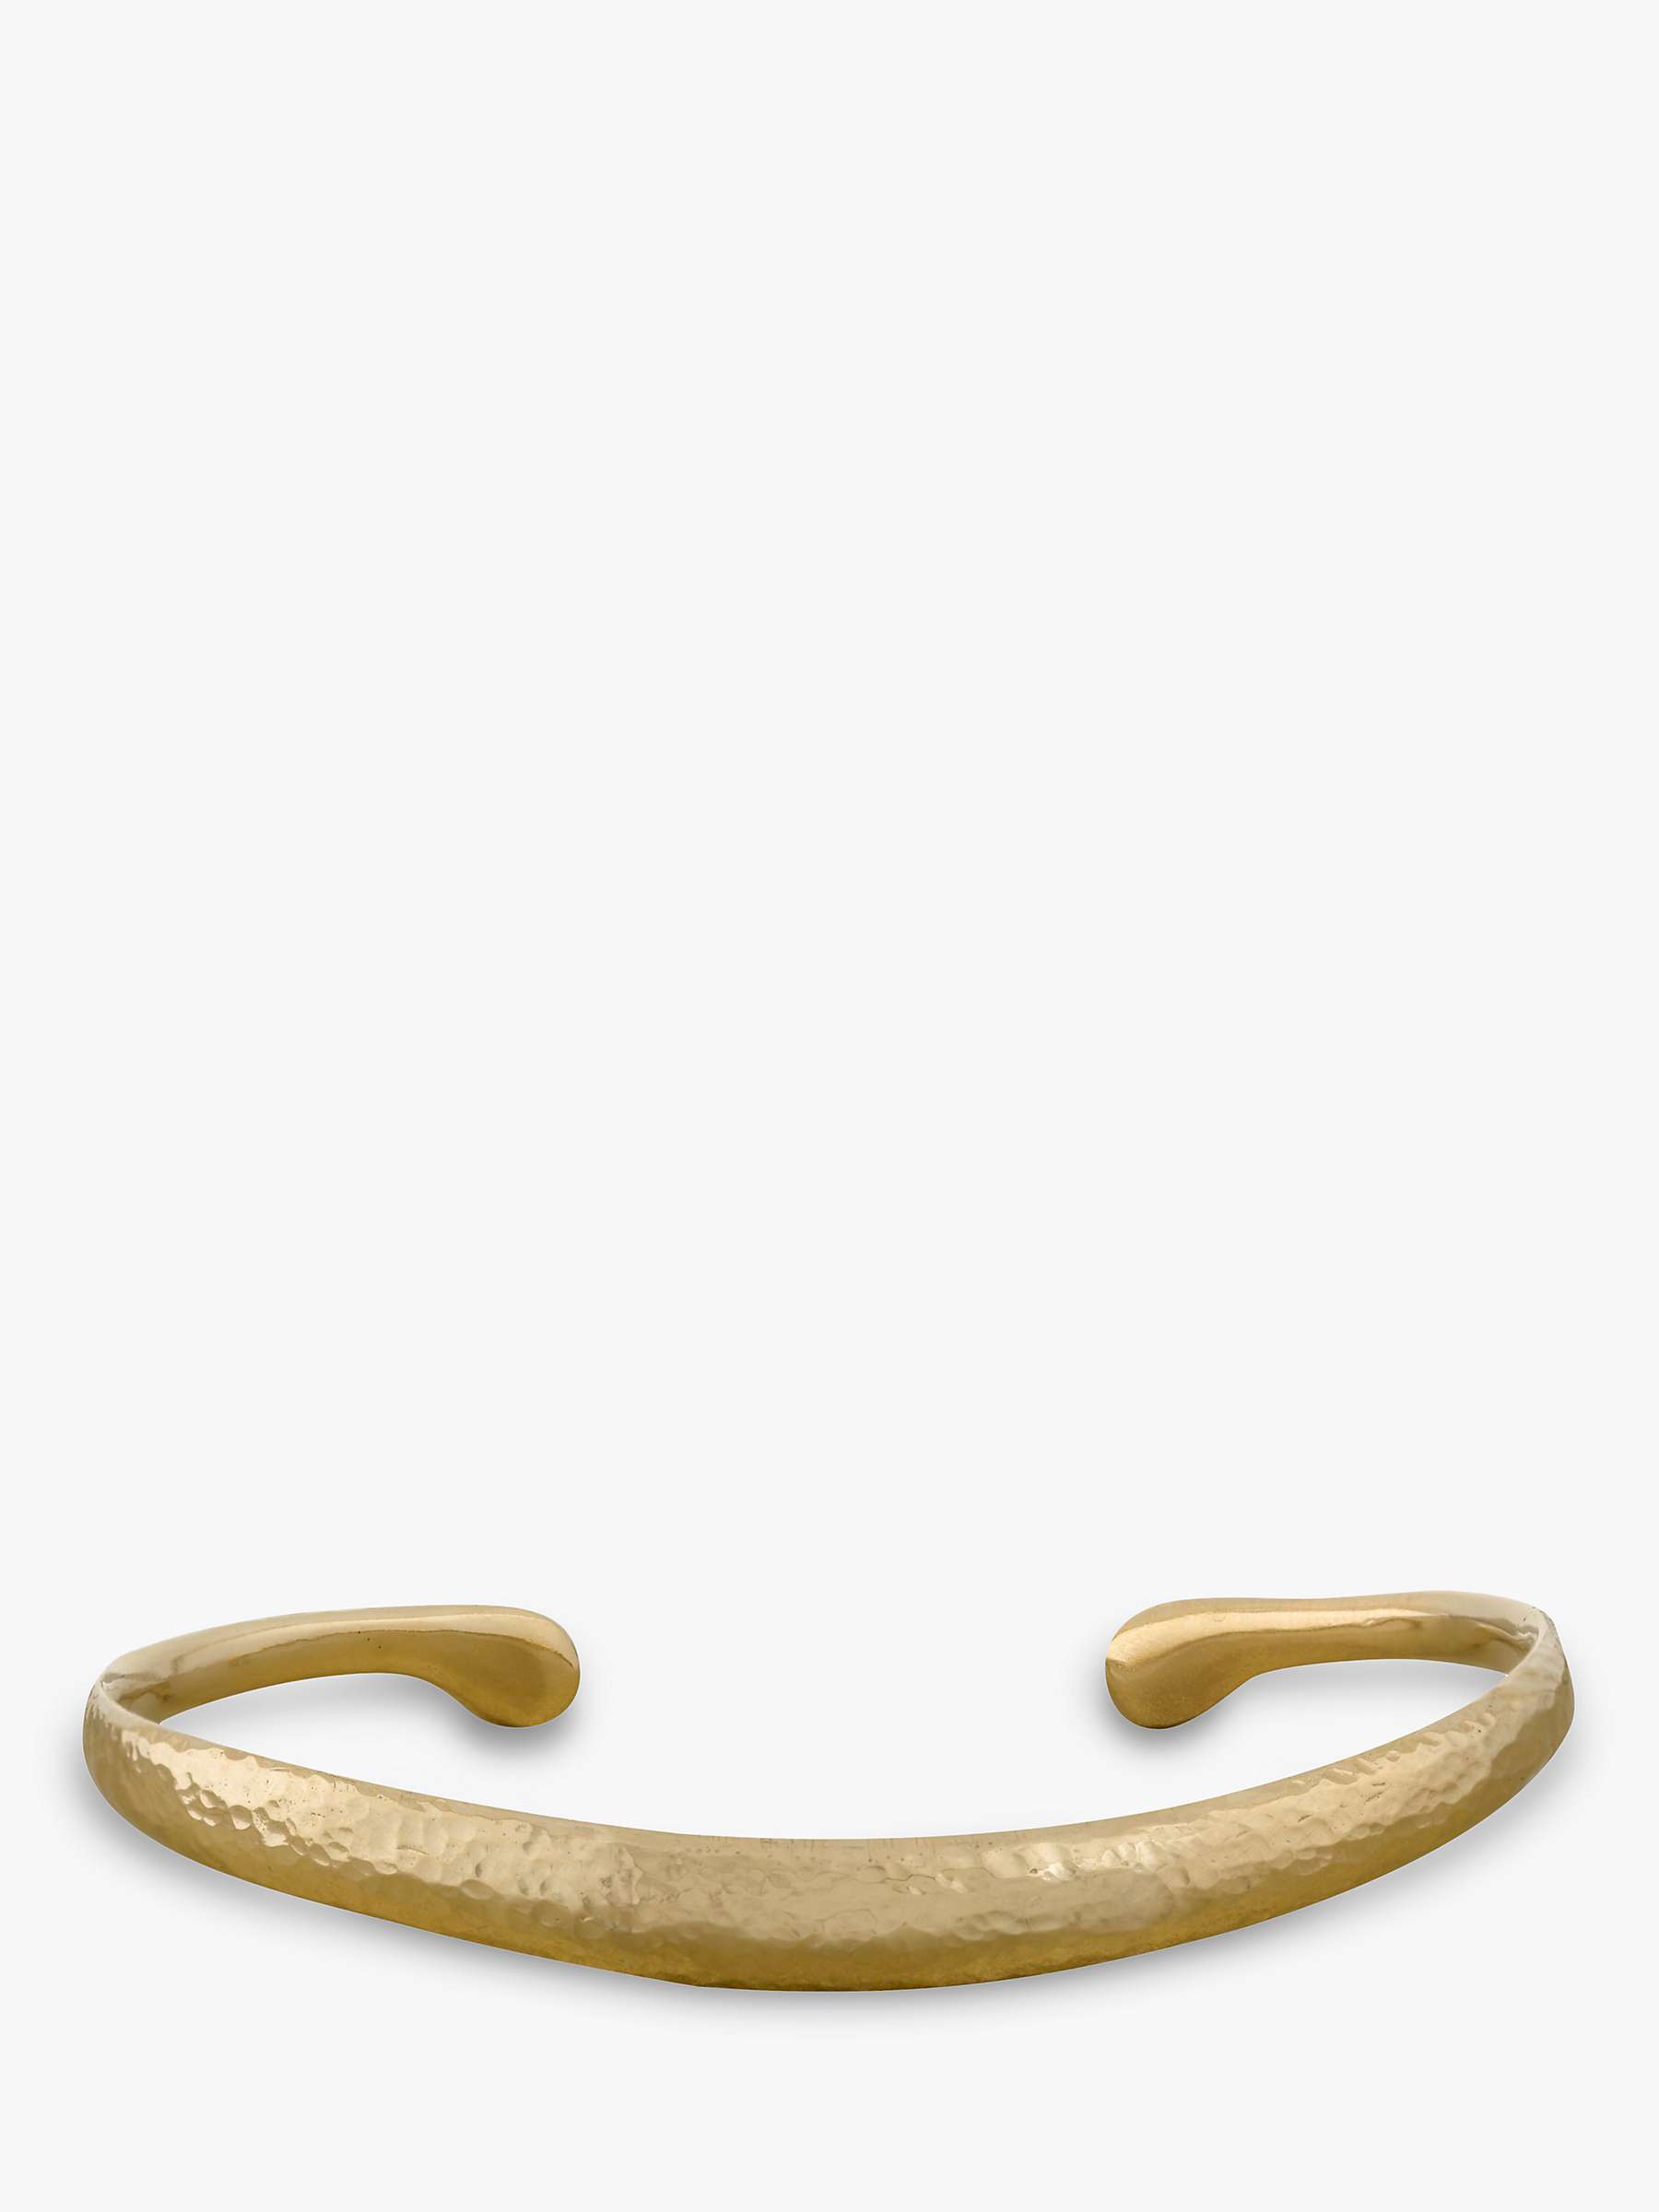 Buy Dower & Hall Nomad 18ct Gold Vermeil Curved Torc Bangle Online at johnlewis.com